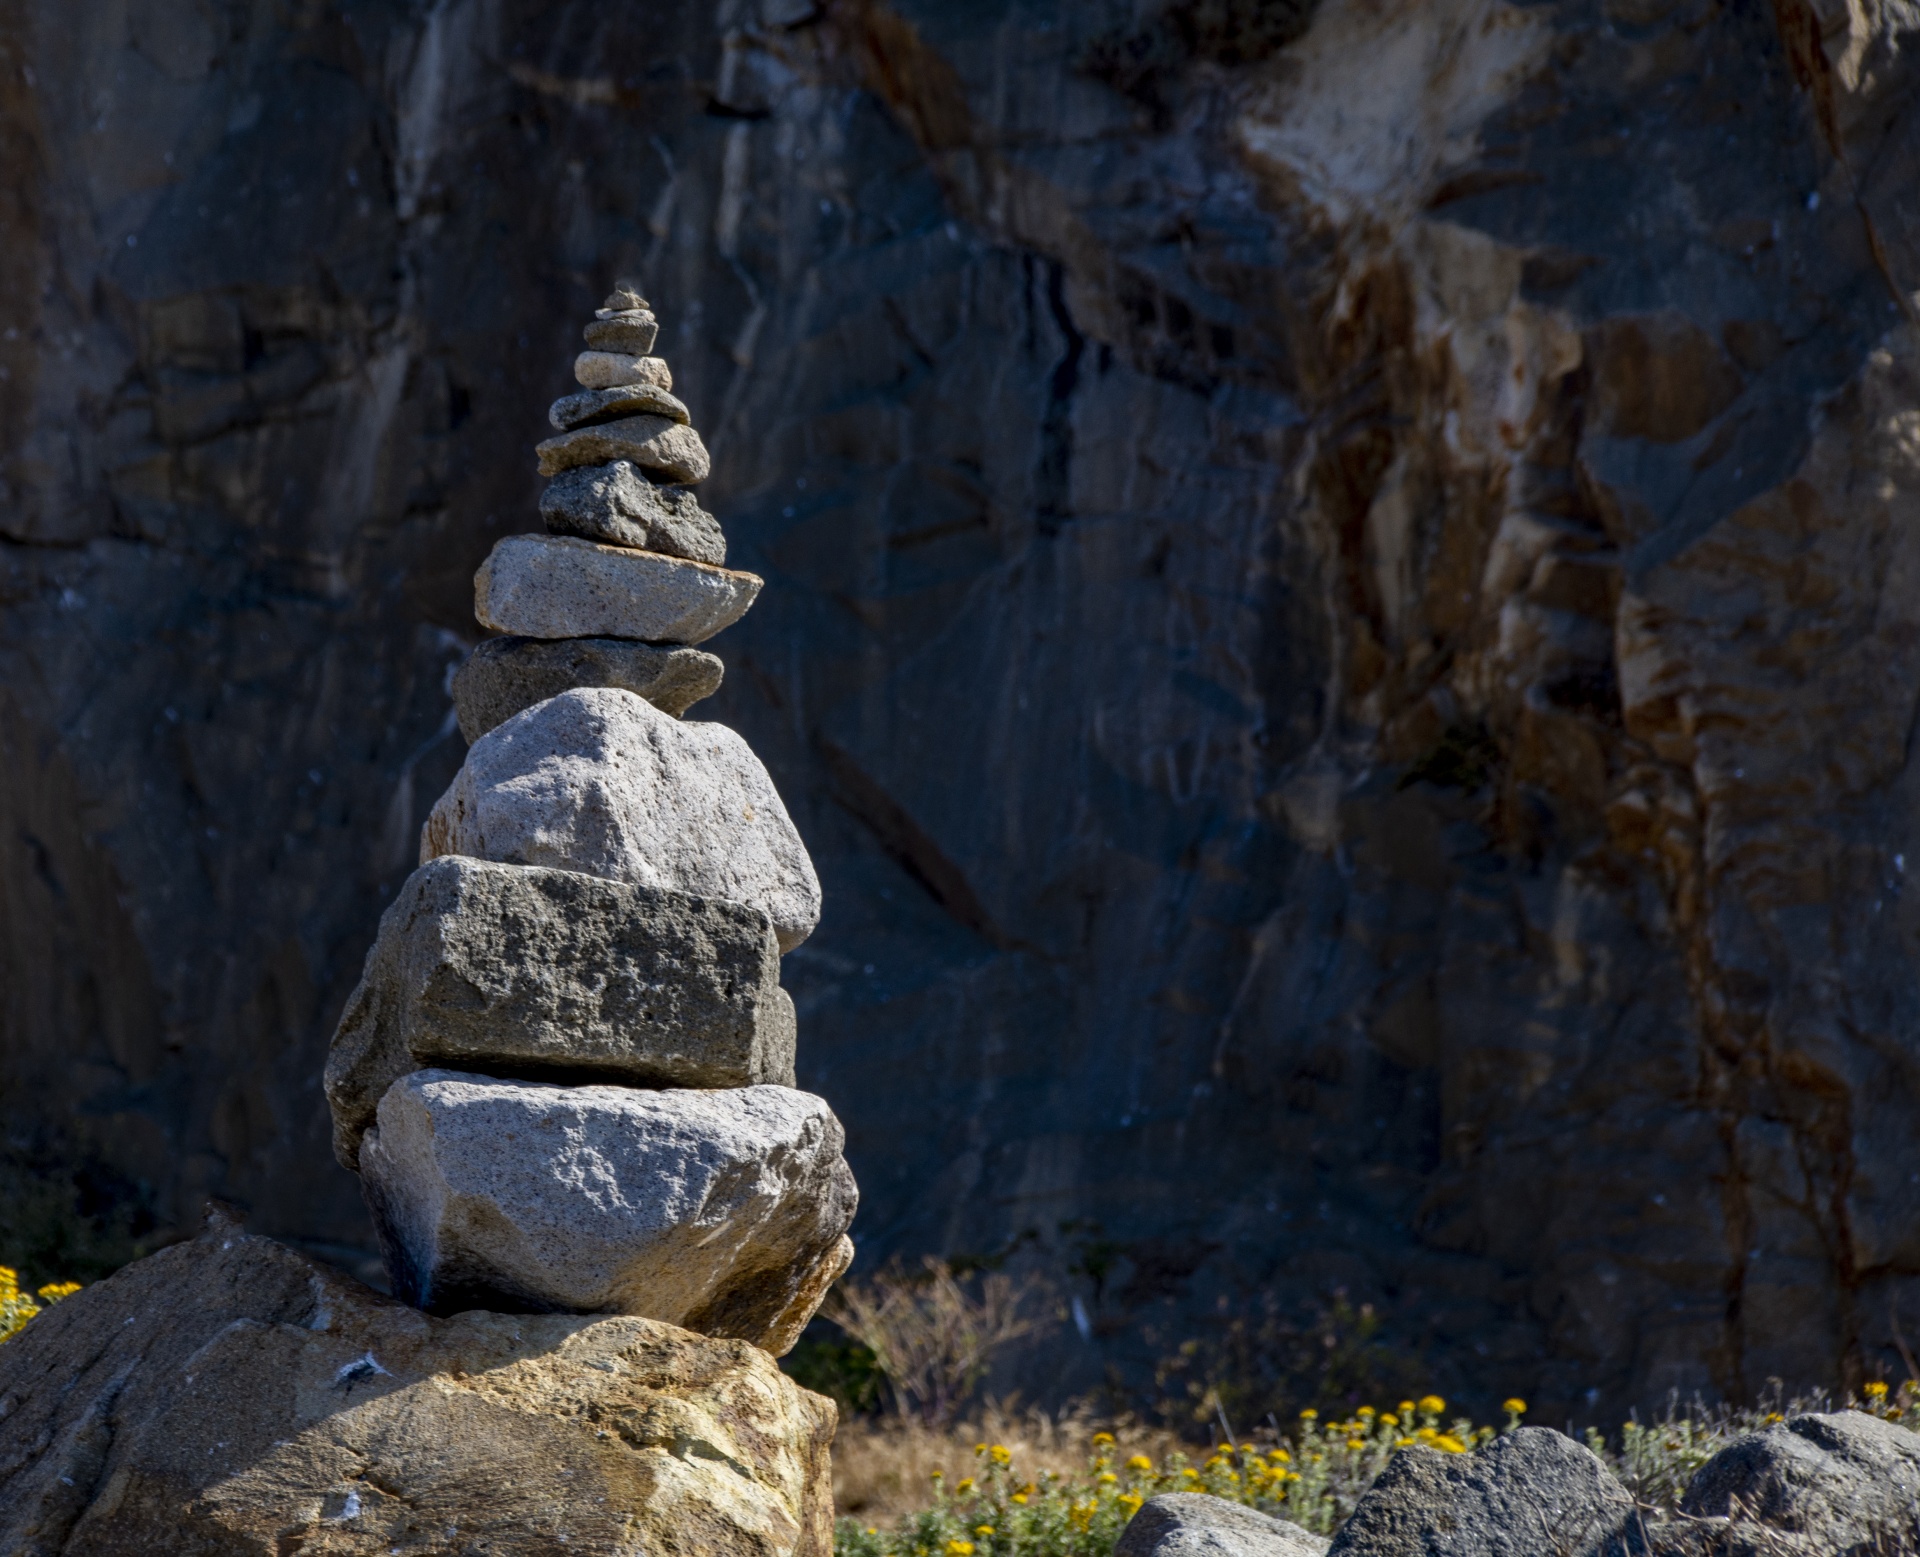 Zen Rocks